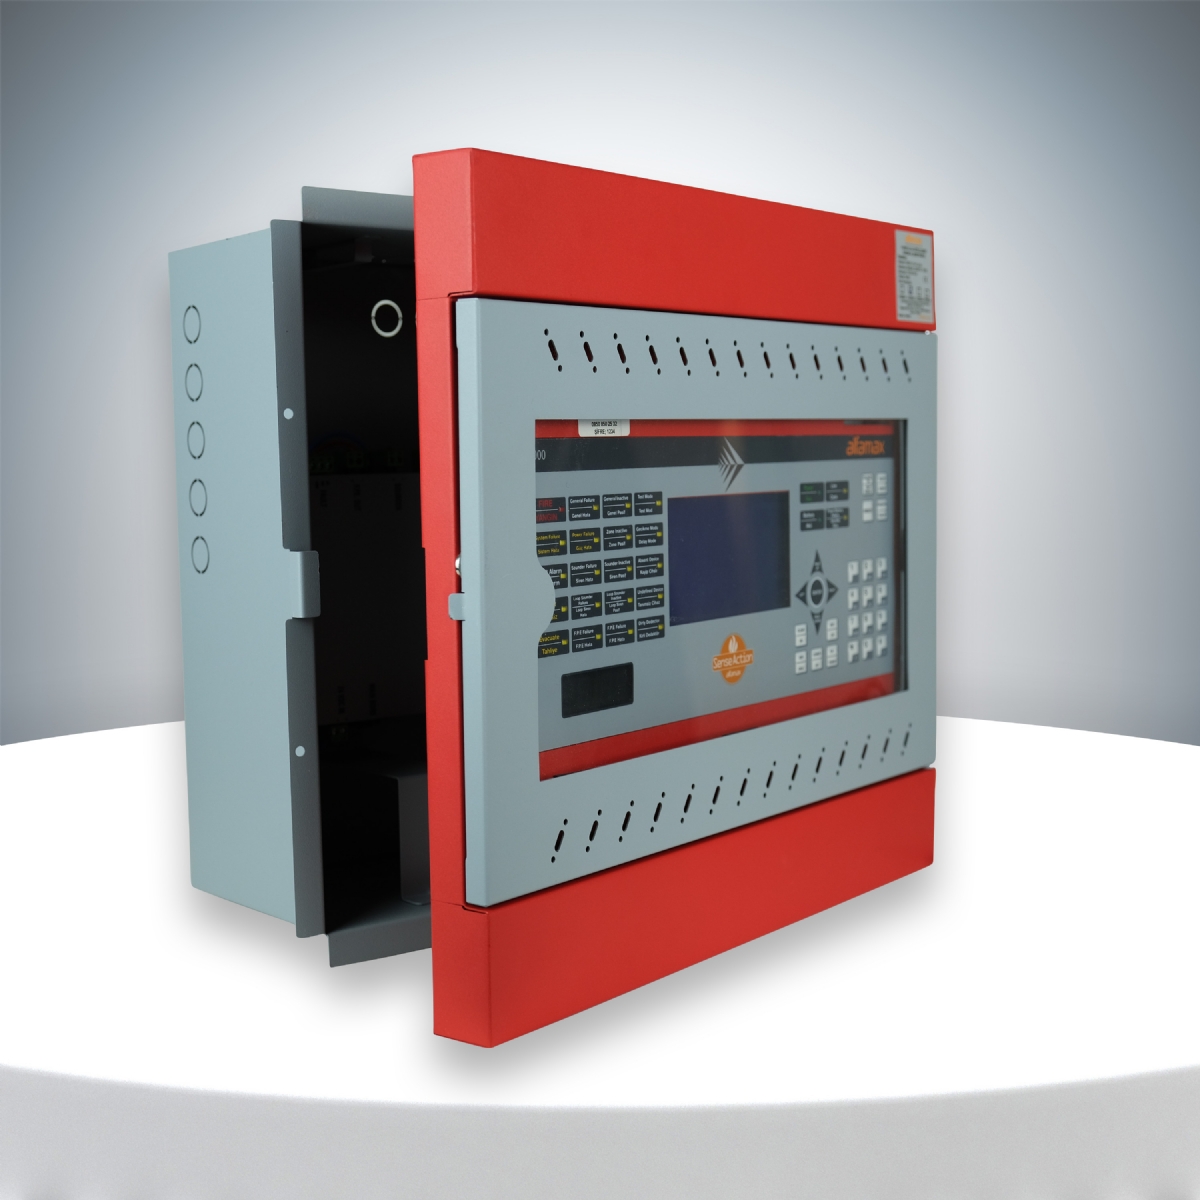 I-1000-4 3 Loop Addressable Fire Alarm Panel